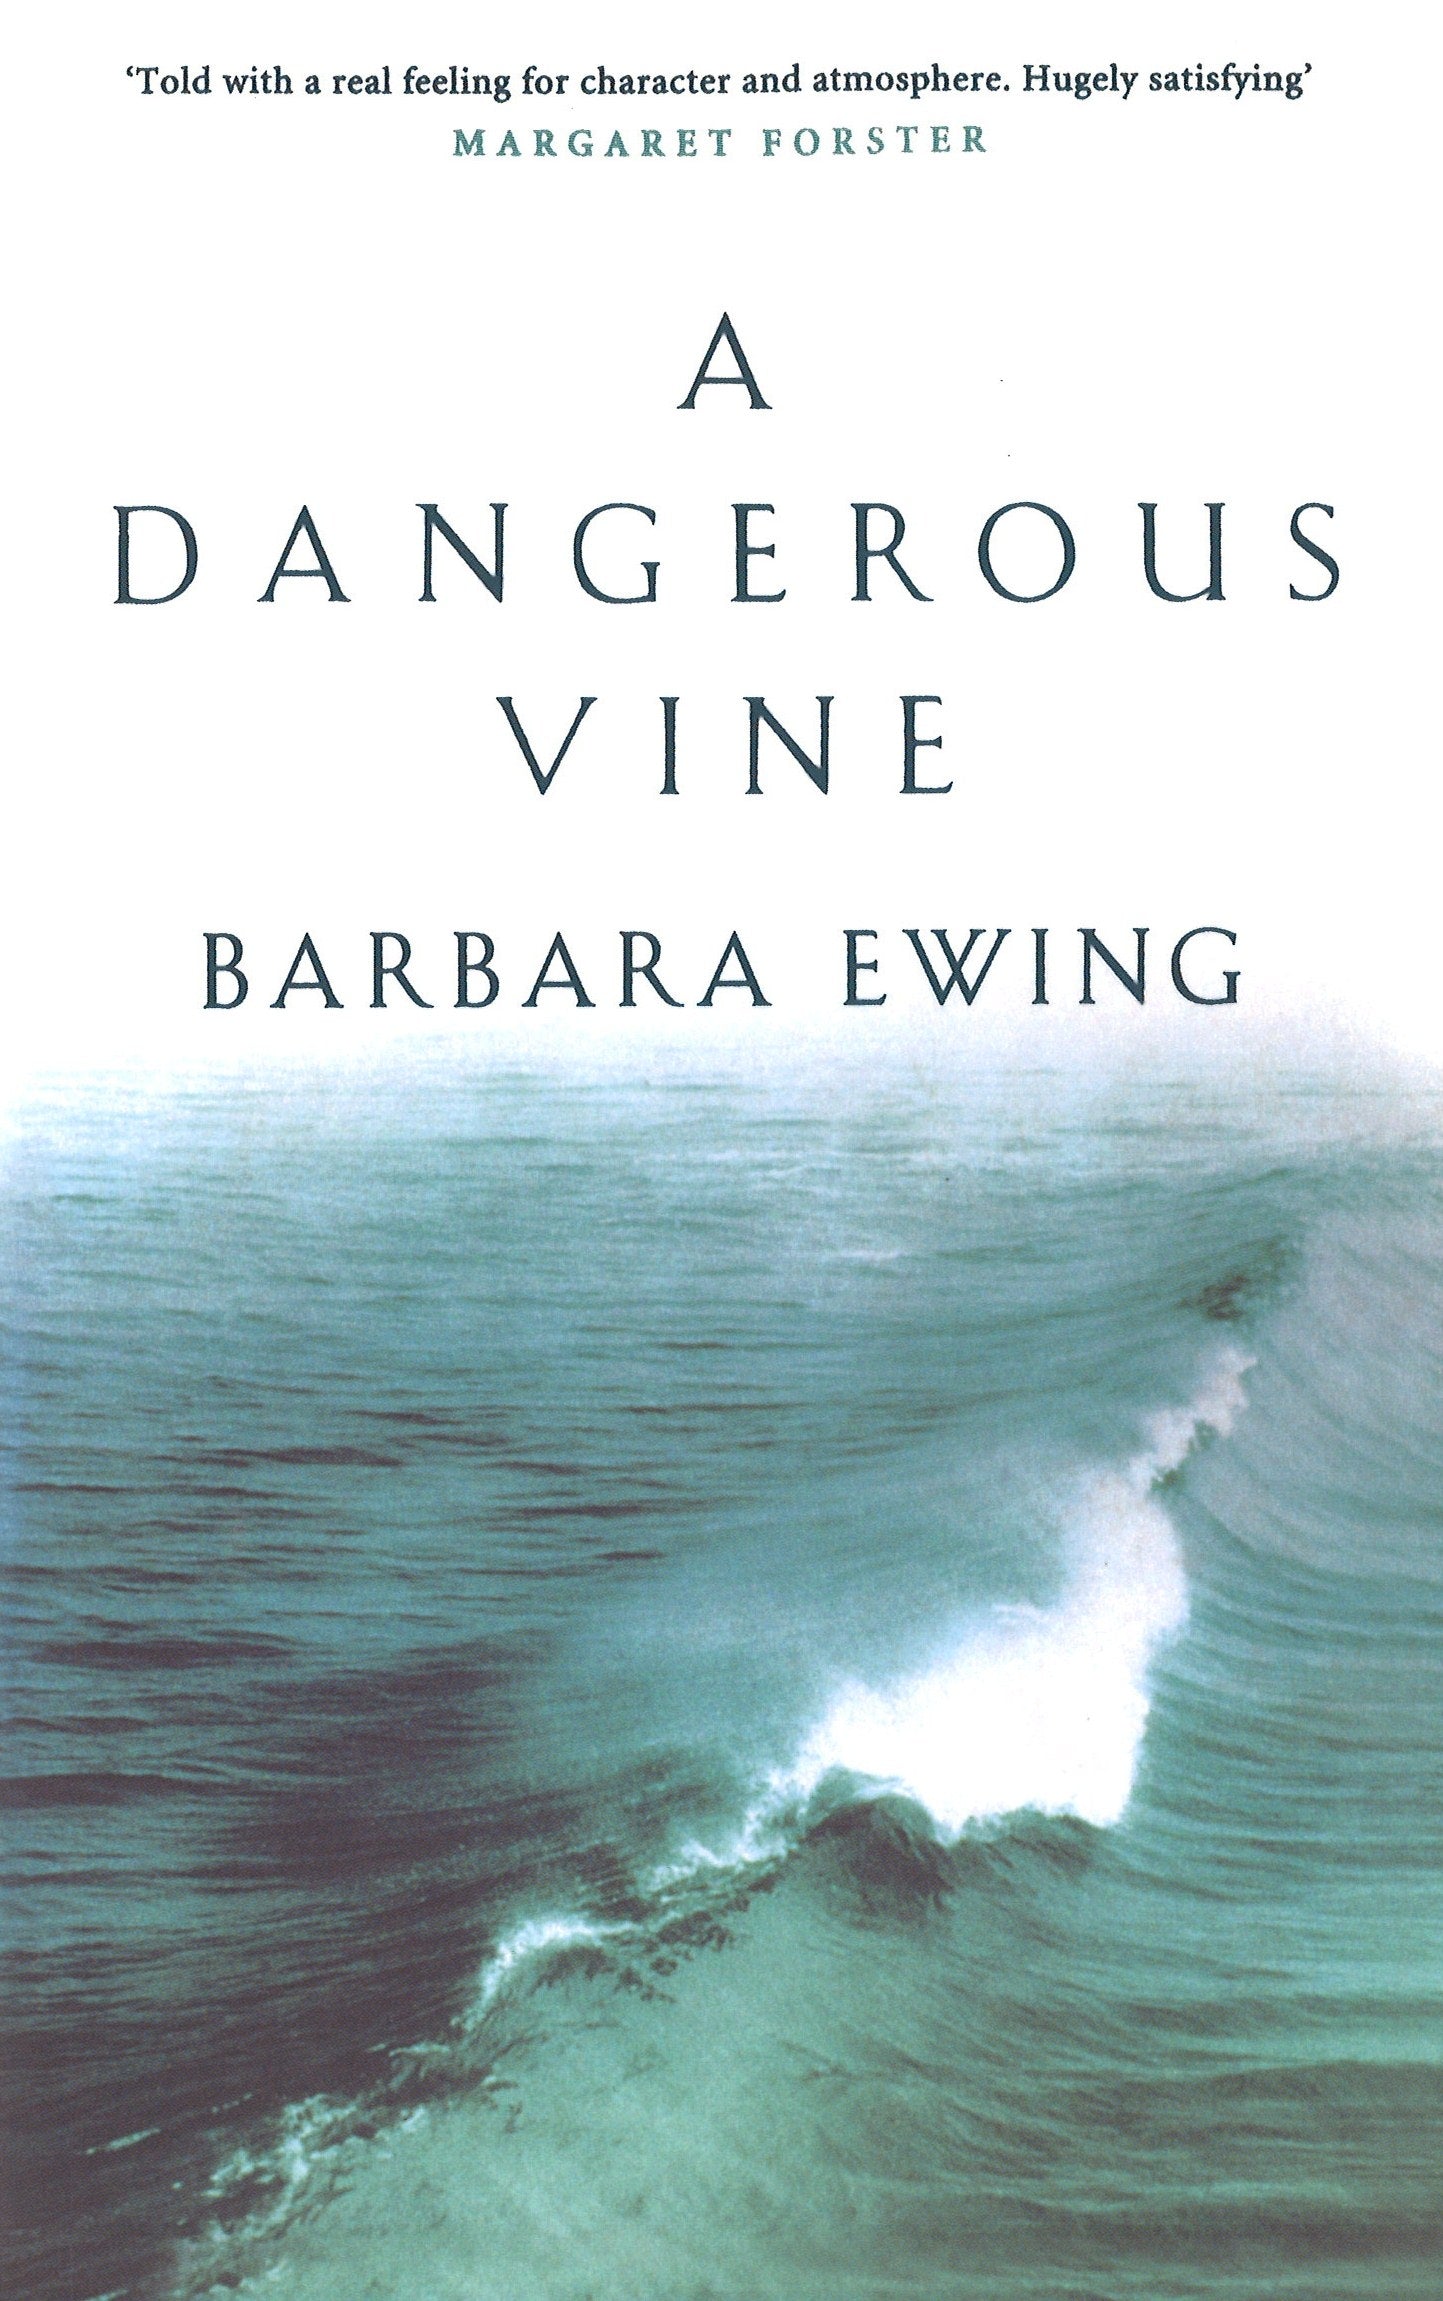 A Dangerous Vine by Barbara Ewing